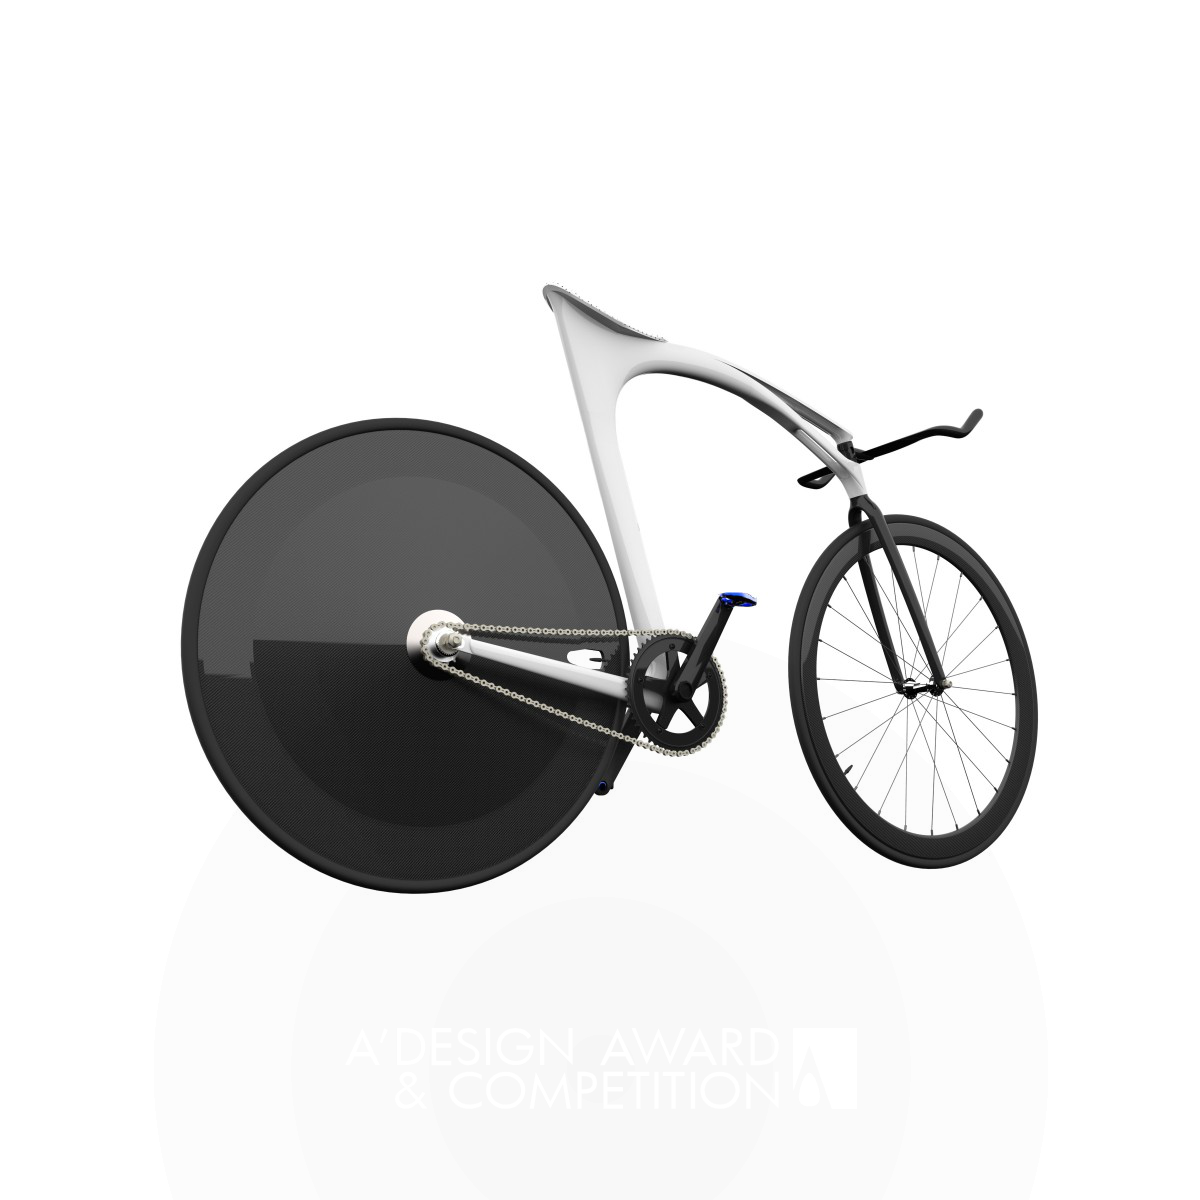 3bee bicycle frame  by Tamás Túri